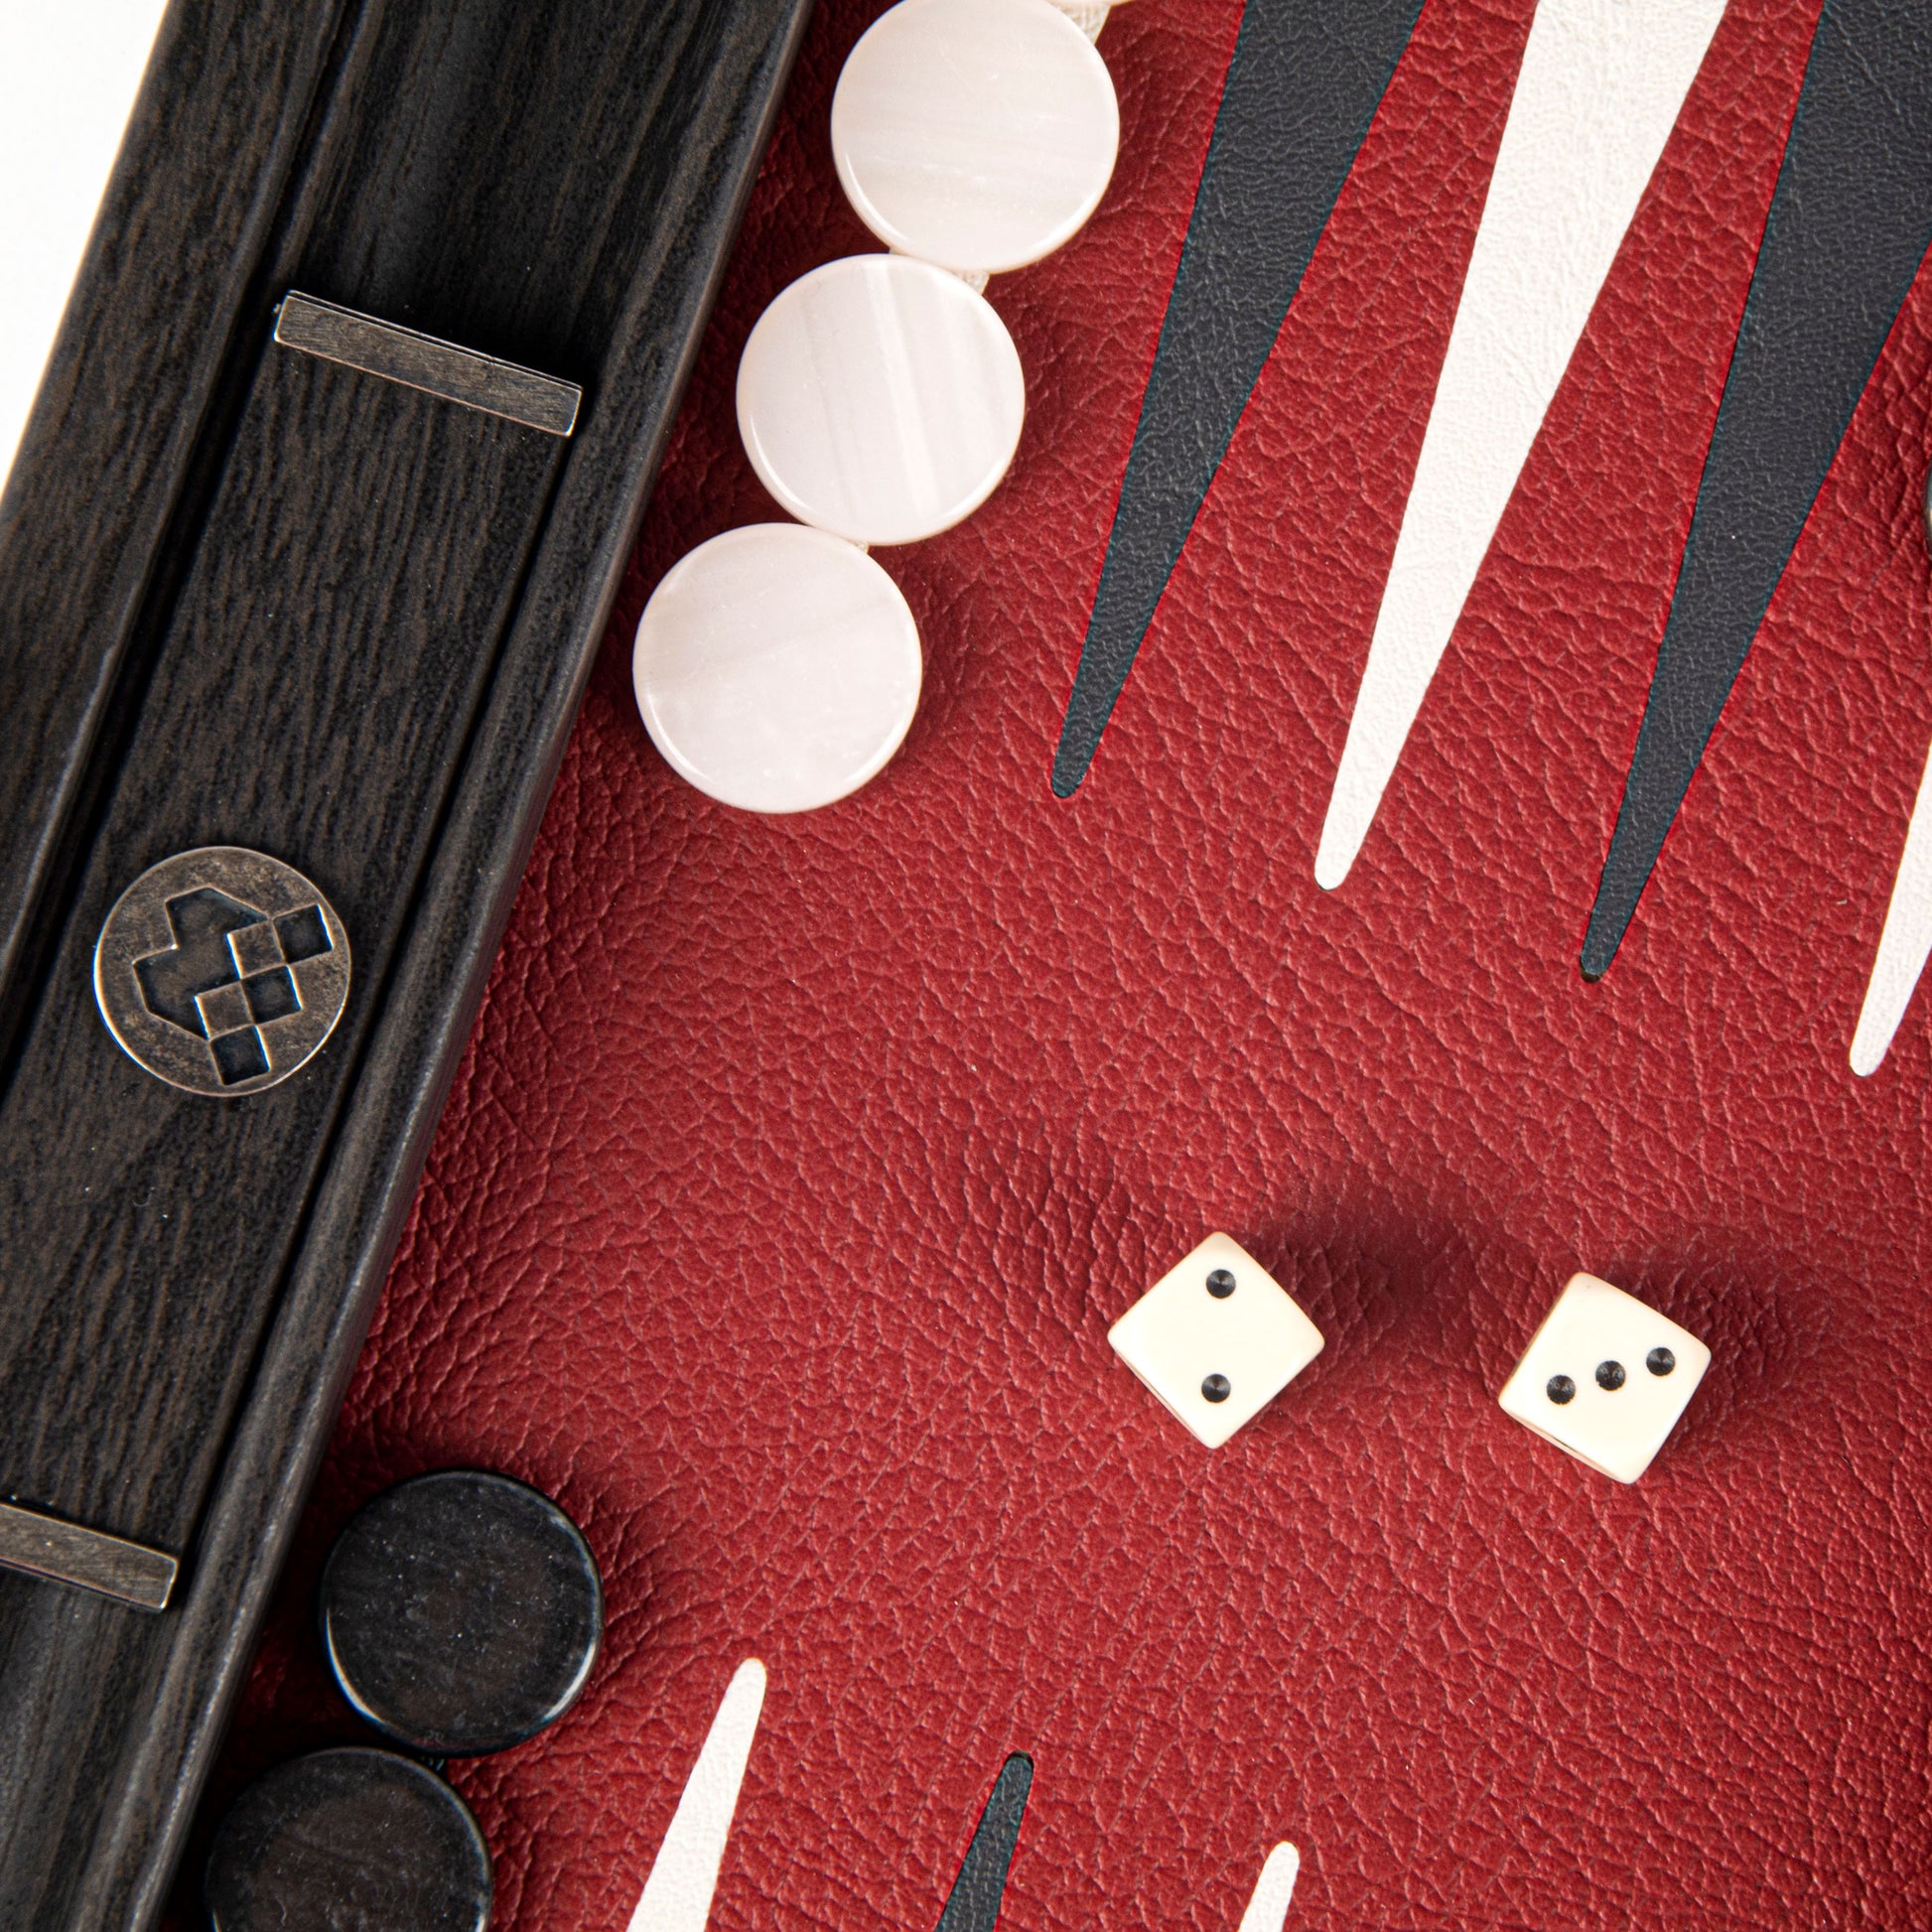 BURGUNDY RED Backgammon (Travel size) - Premium Backgammon from MANOPOULOS Chess & Backgammon - Just €119! Shop now at MANOPOULOS Chess & Backgammon